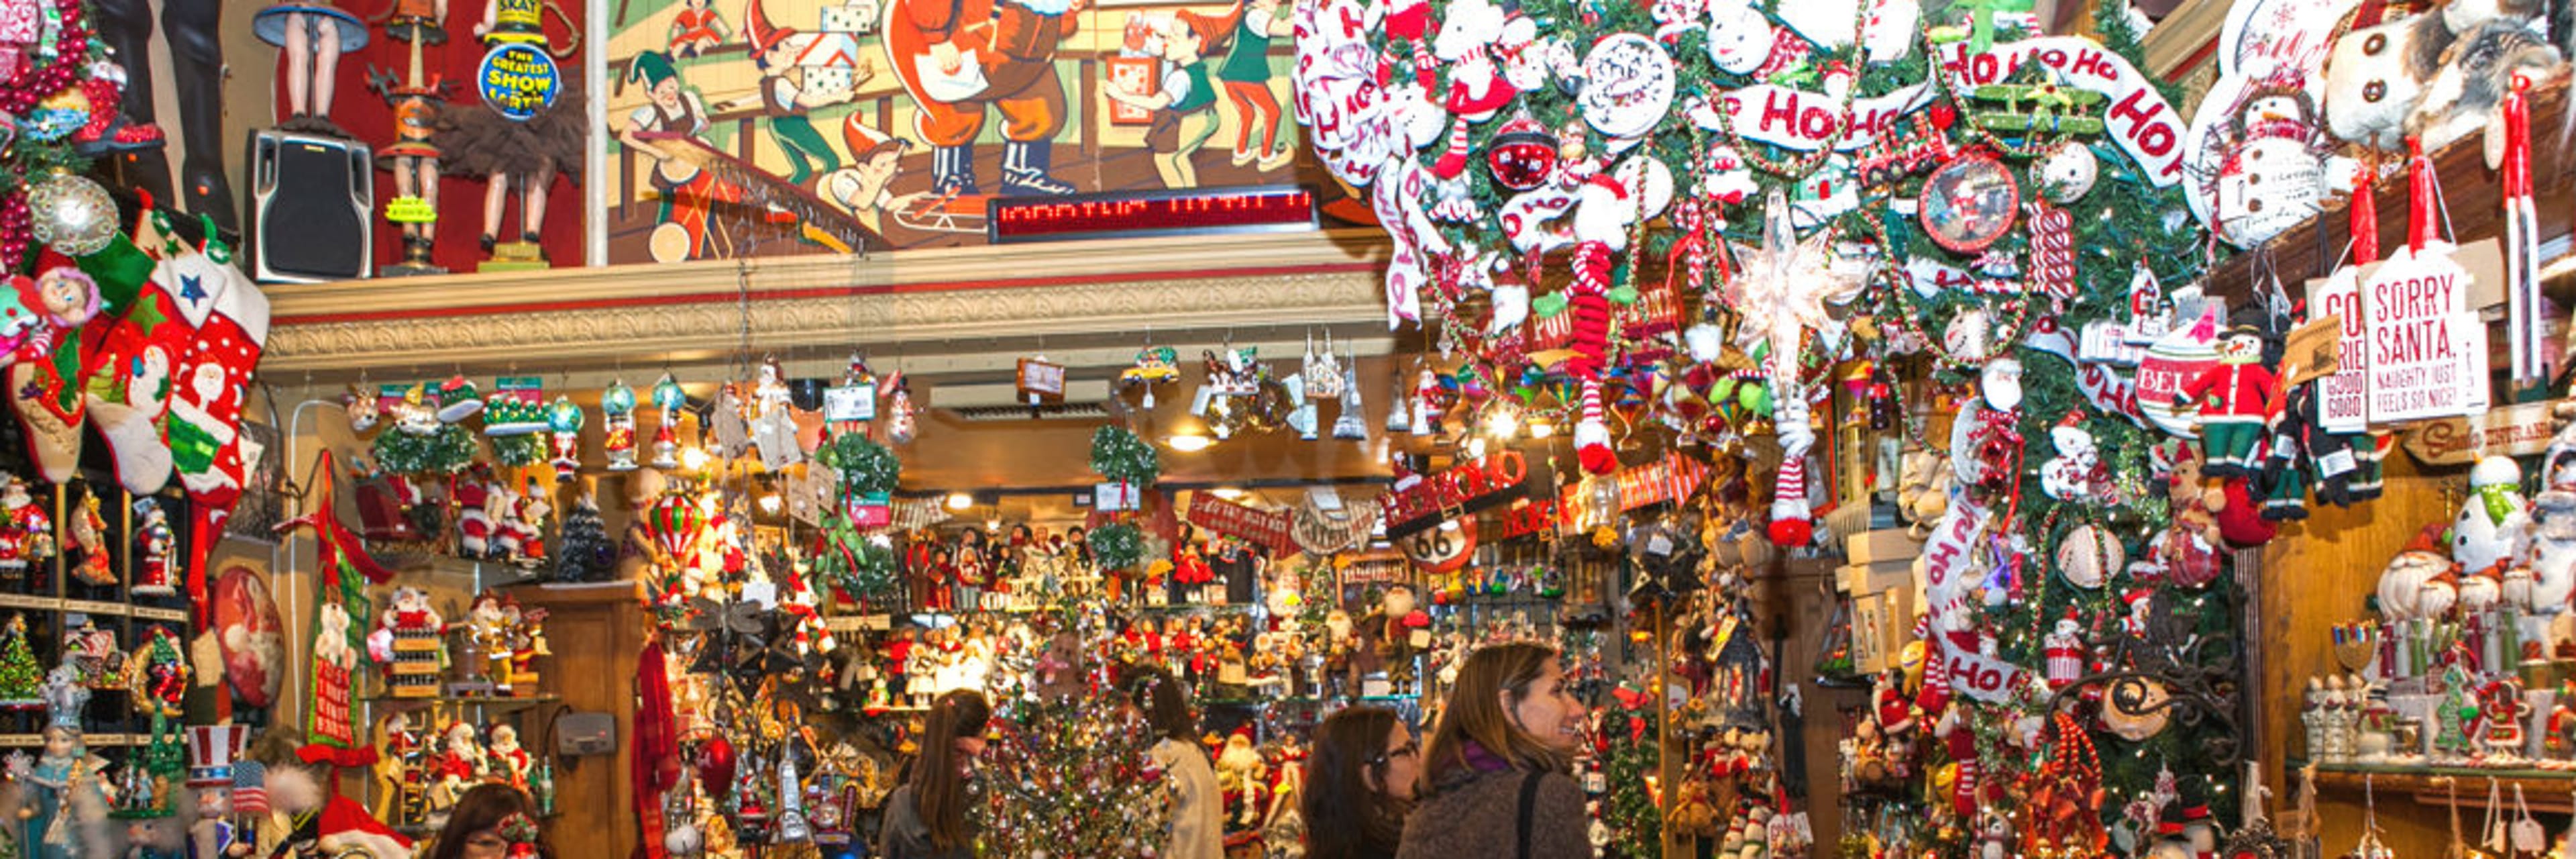 Holiday Markets & Christmas lights walking tour New York